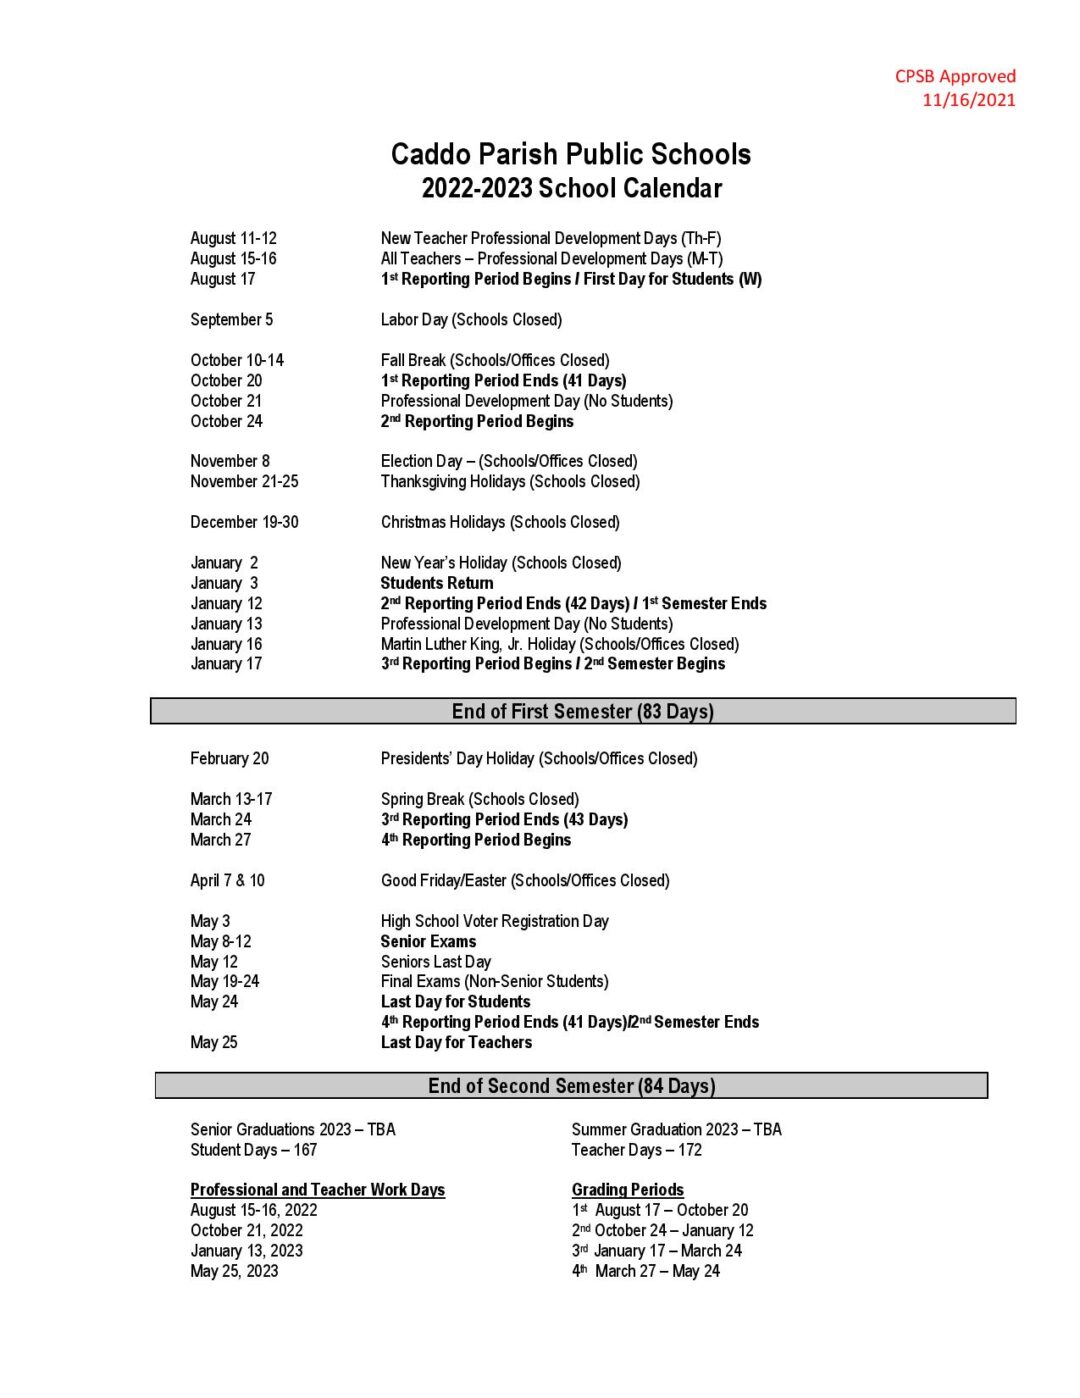 caddo-parish-public-schools-calendar-2022-2023